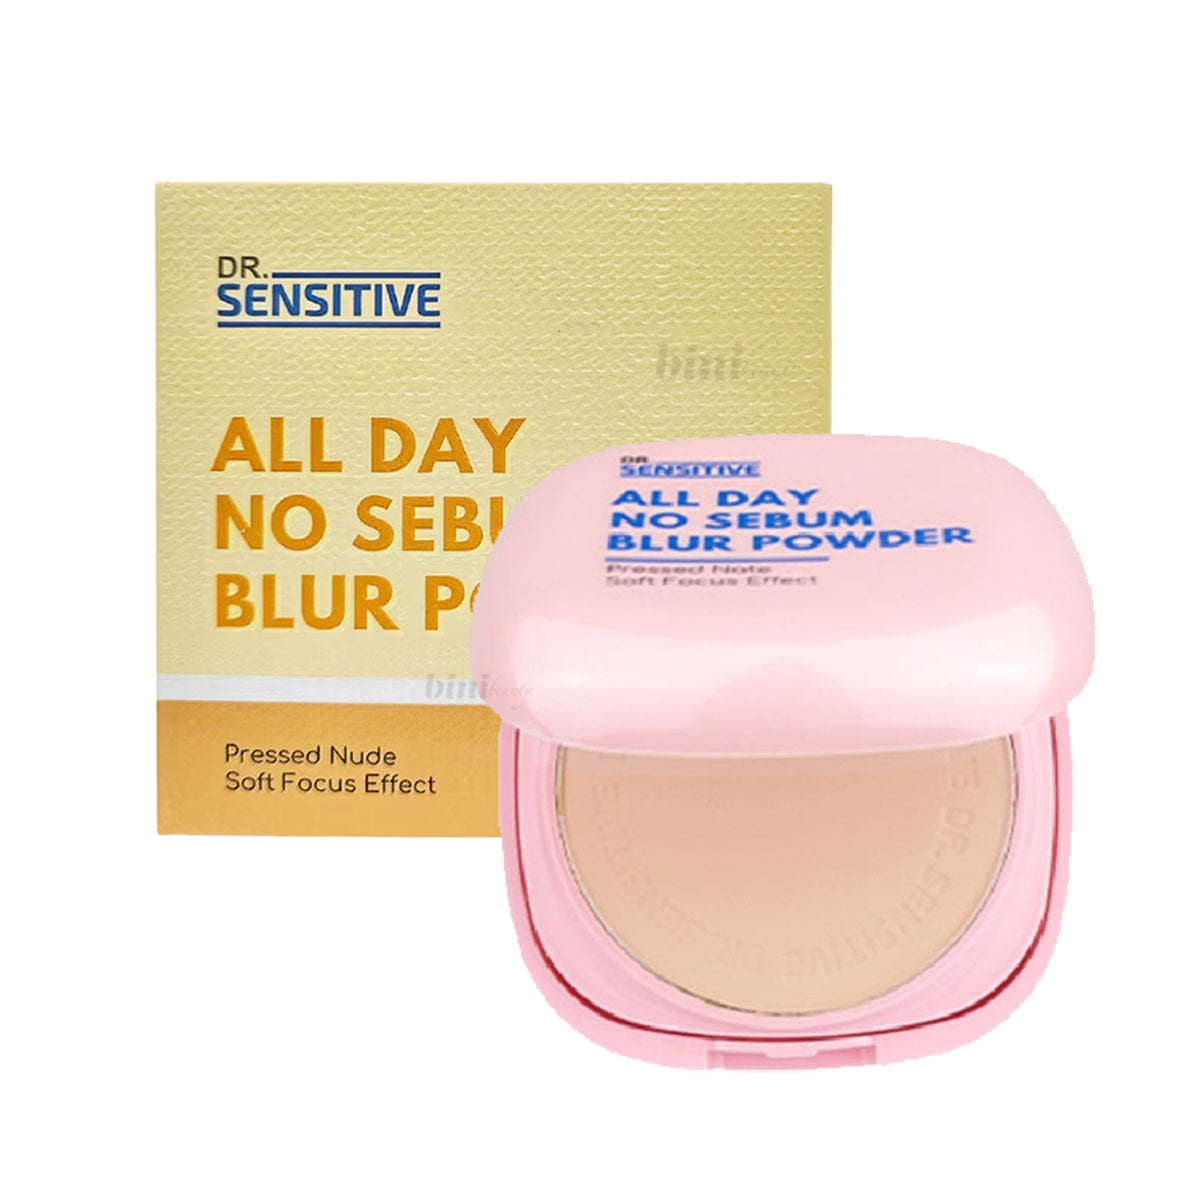 Dr. Sensitive All Day No Sebum Blur Powder - Pressed - nude shade